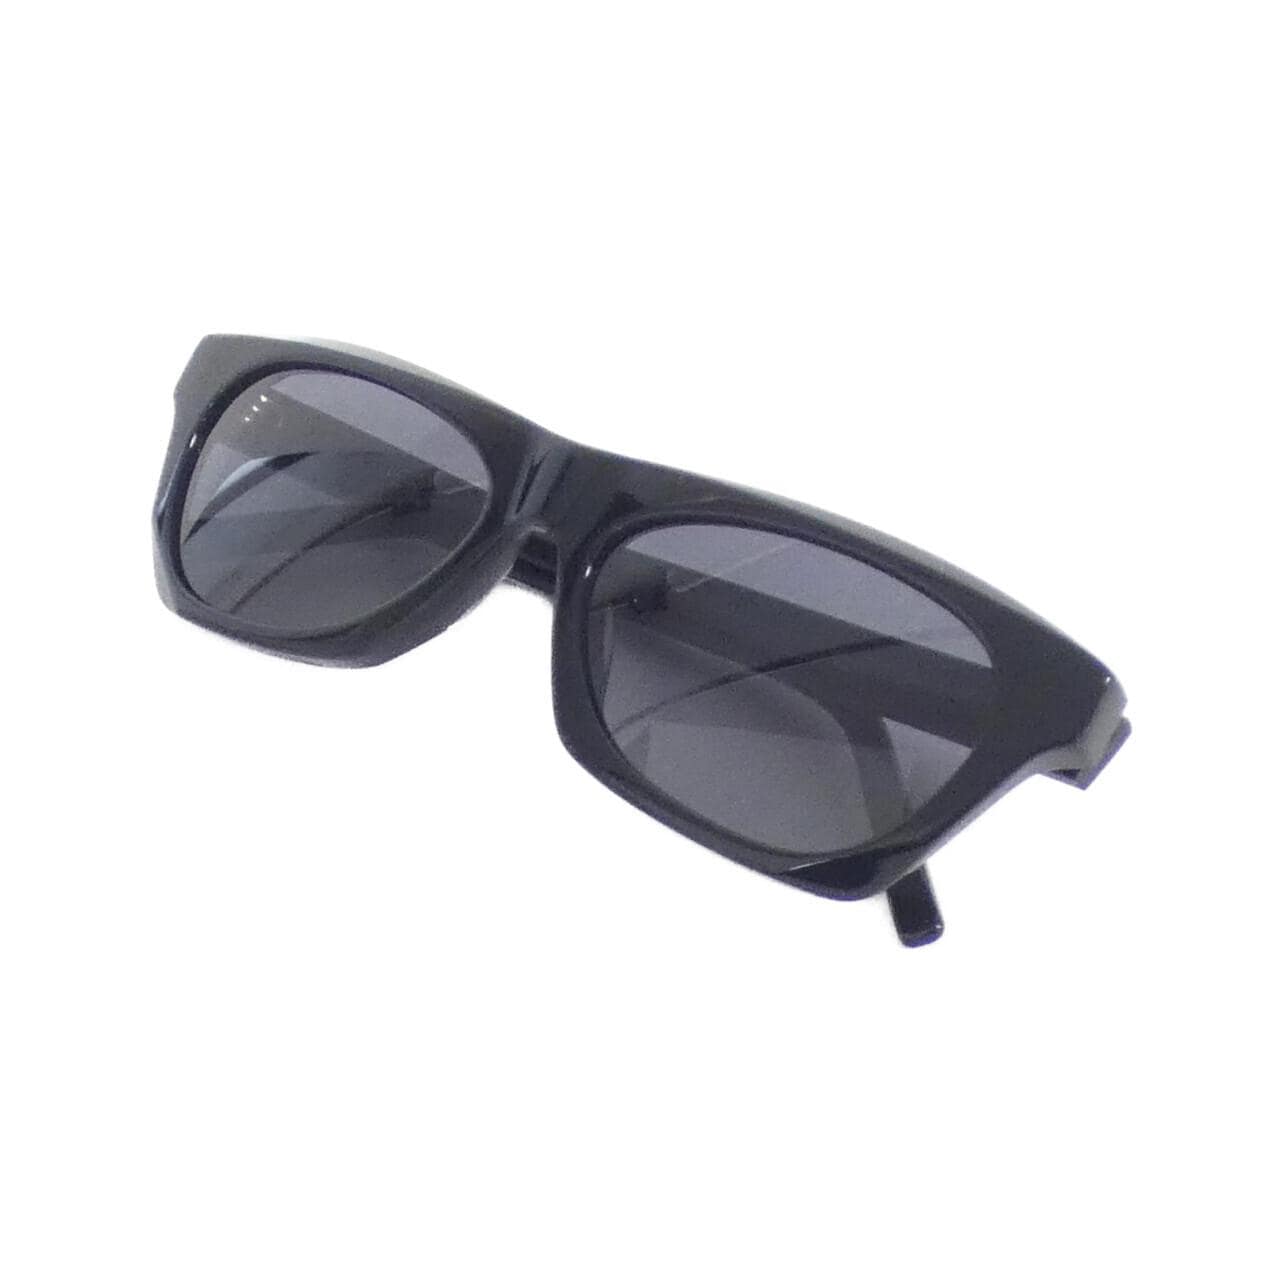 [BRAND NEW] GIVENCHY 40026U Sunglasses